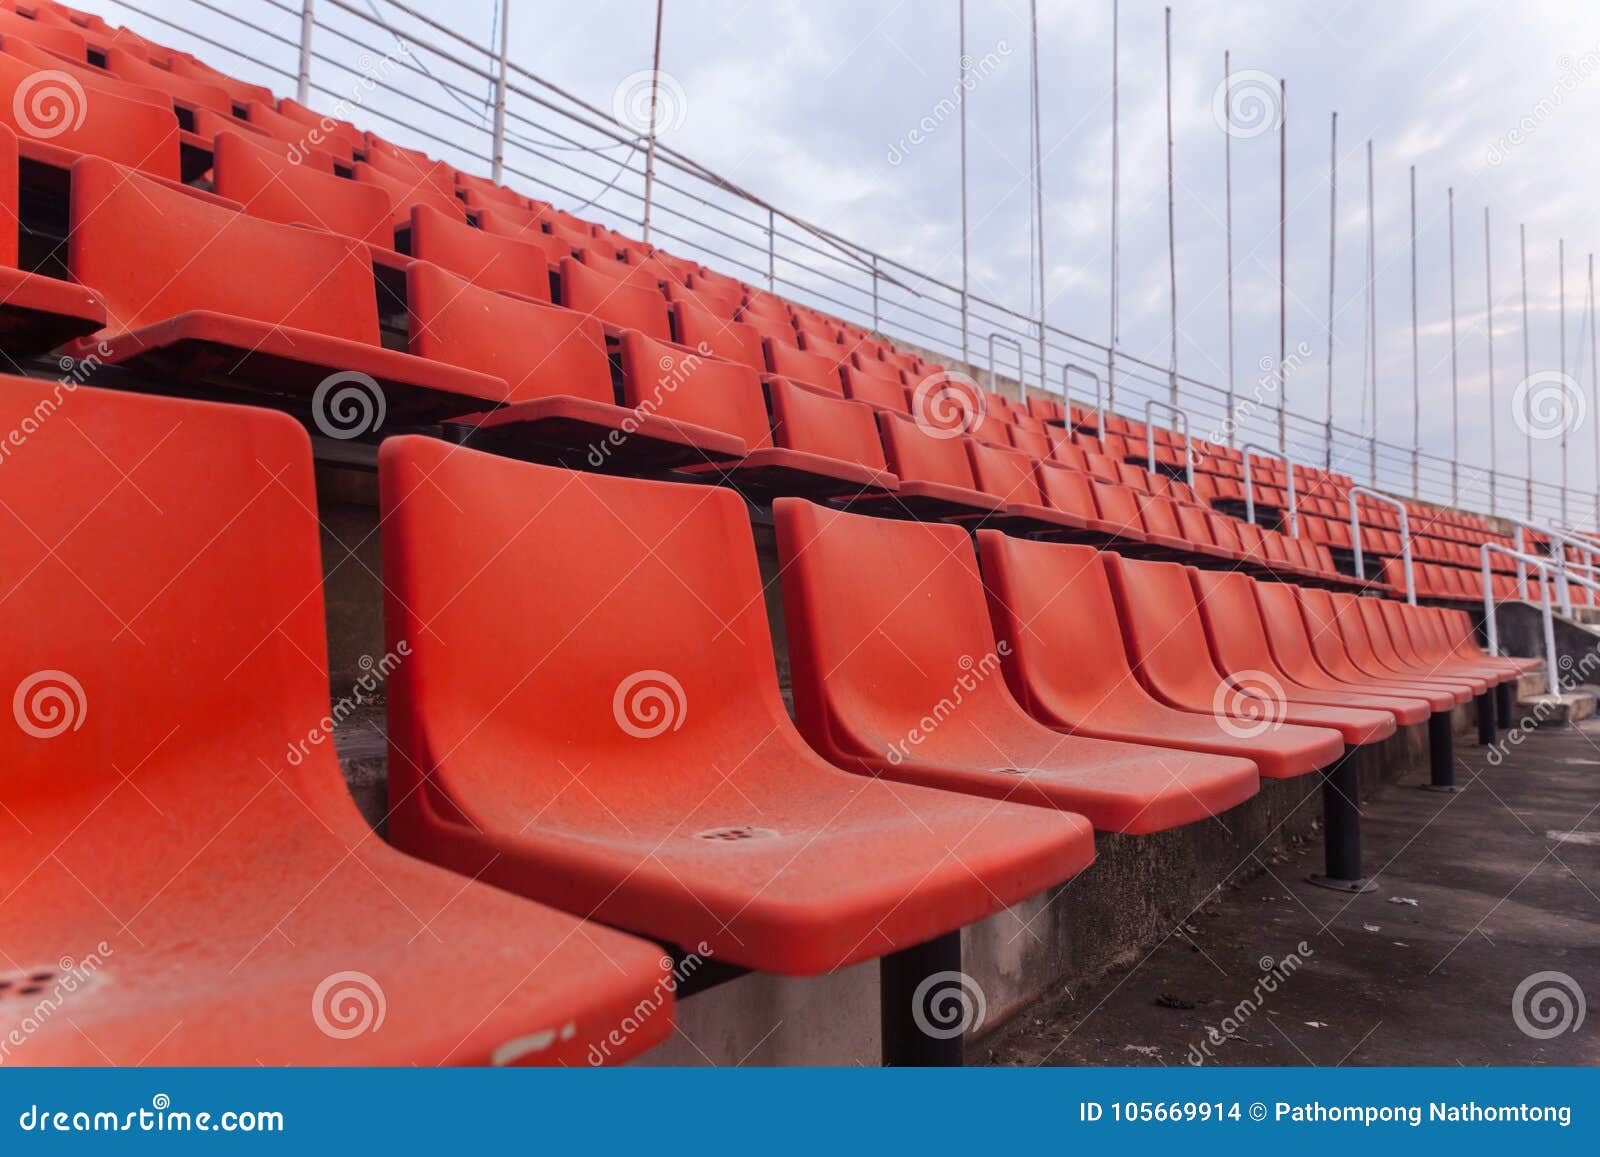 Orange Seat of Football Stadium Stock Photo - Image of pattern, blank ...